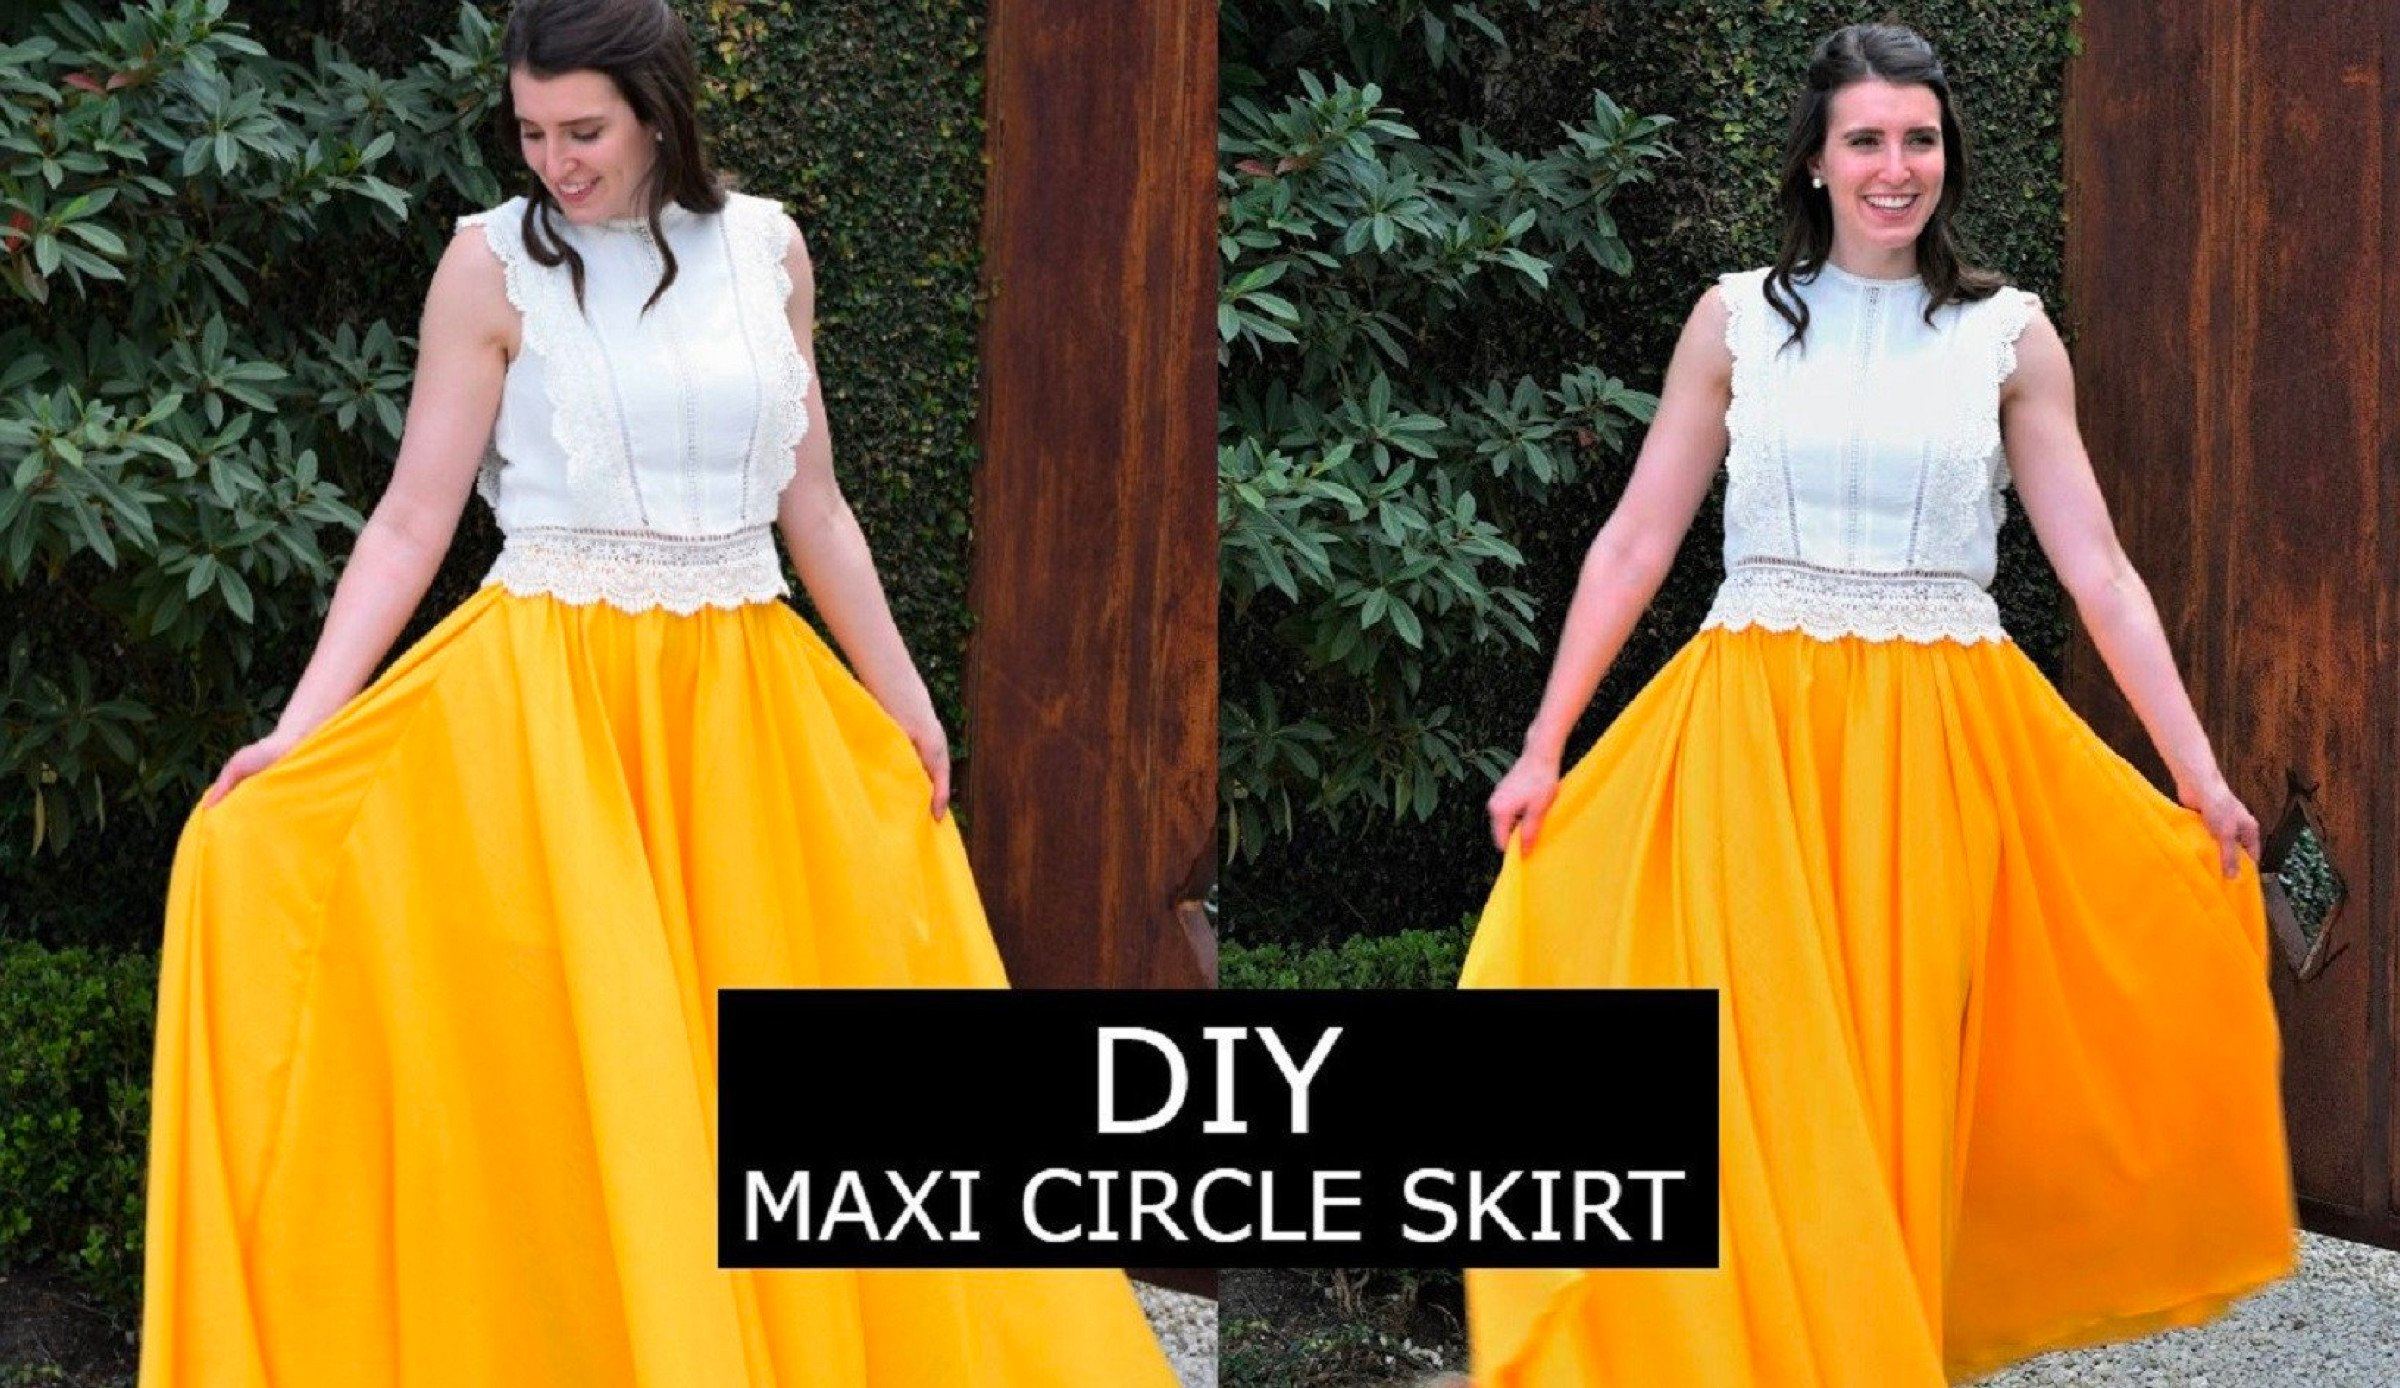 Elastic Waist Circle Skirt Pattern - Free Tutorial